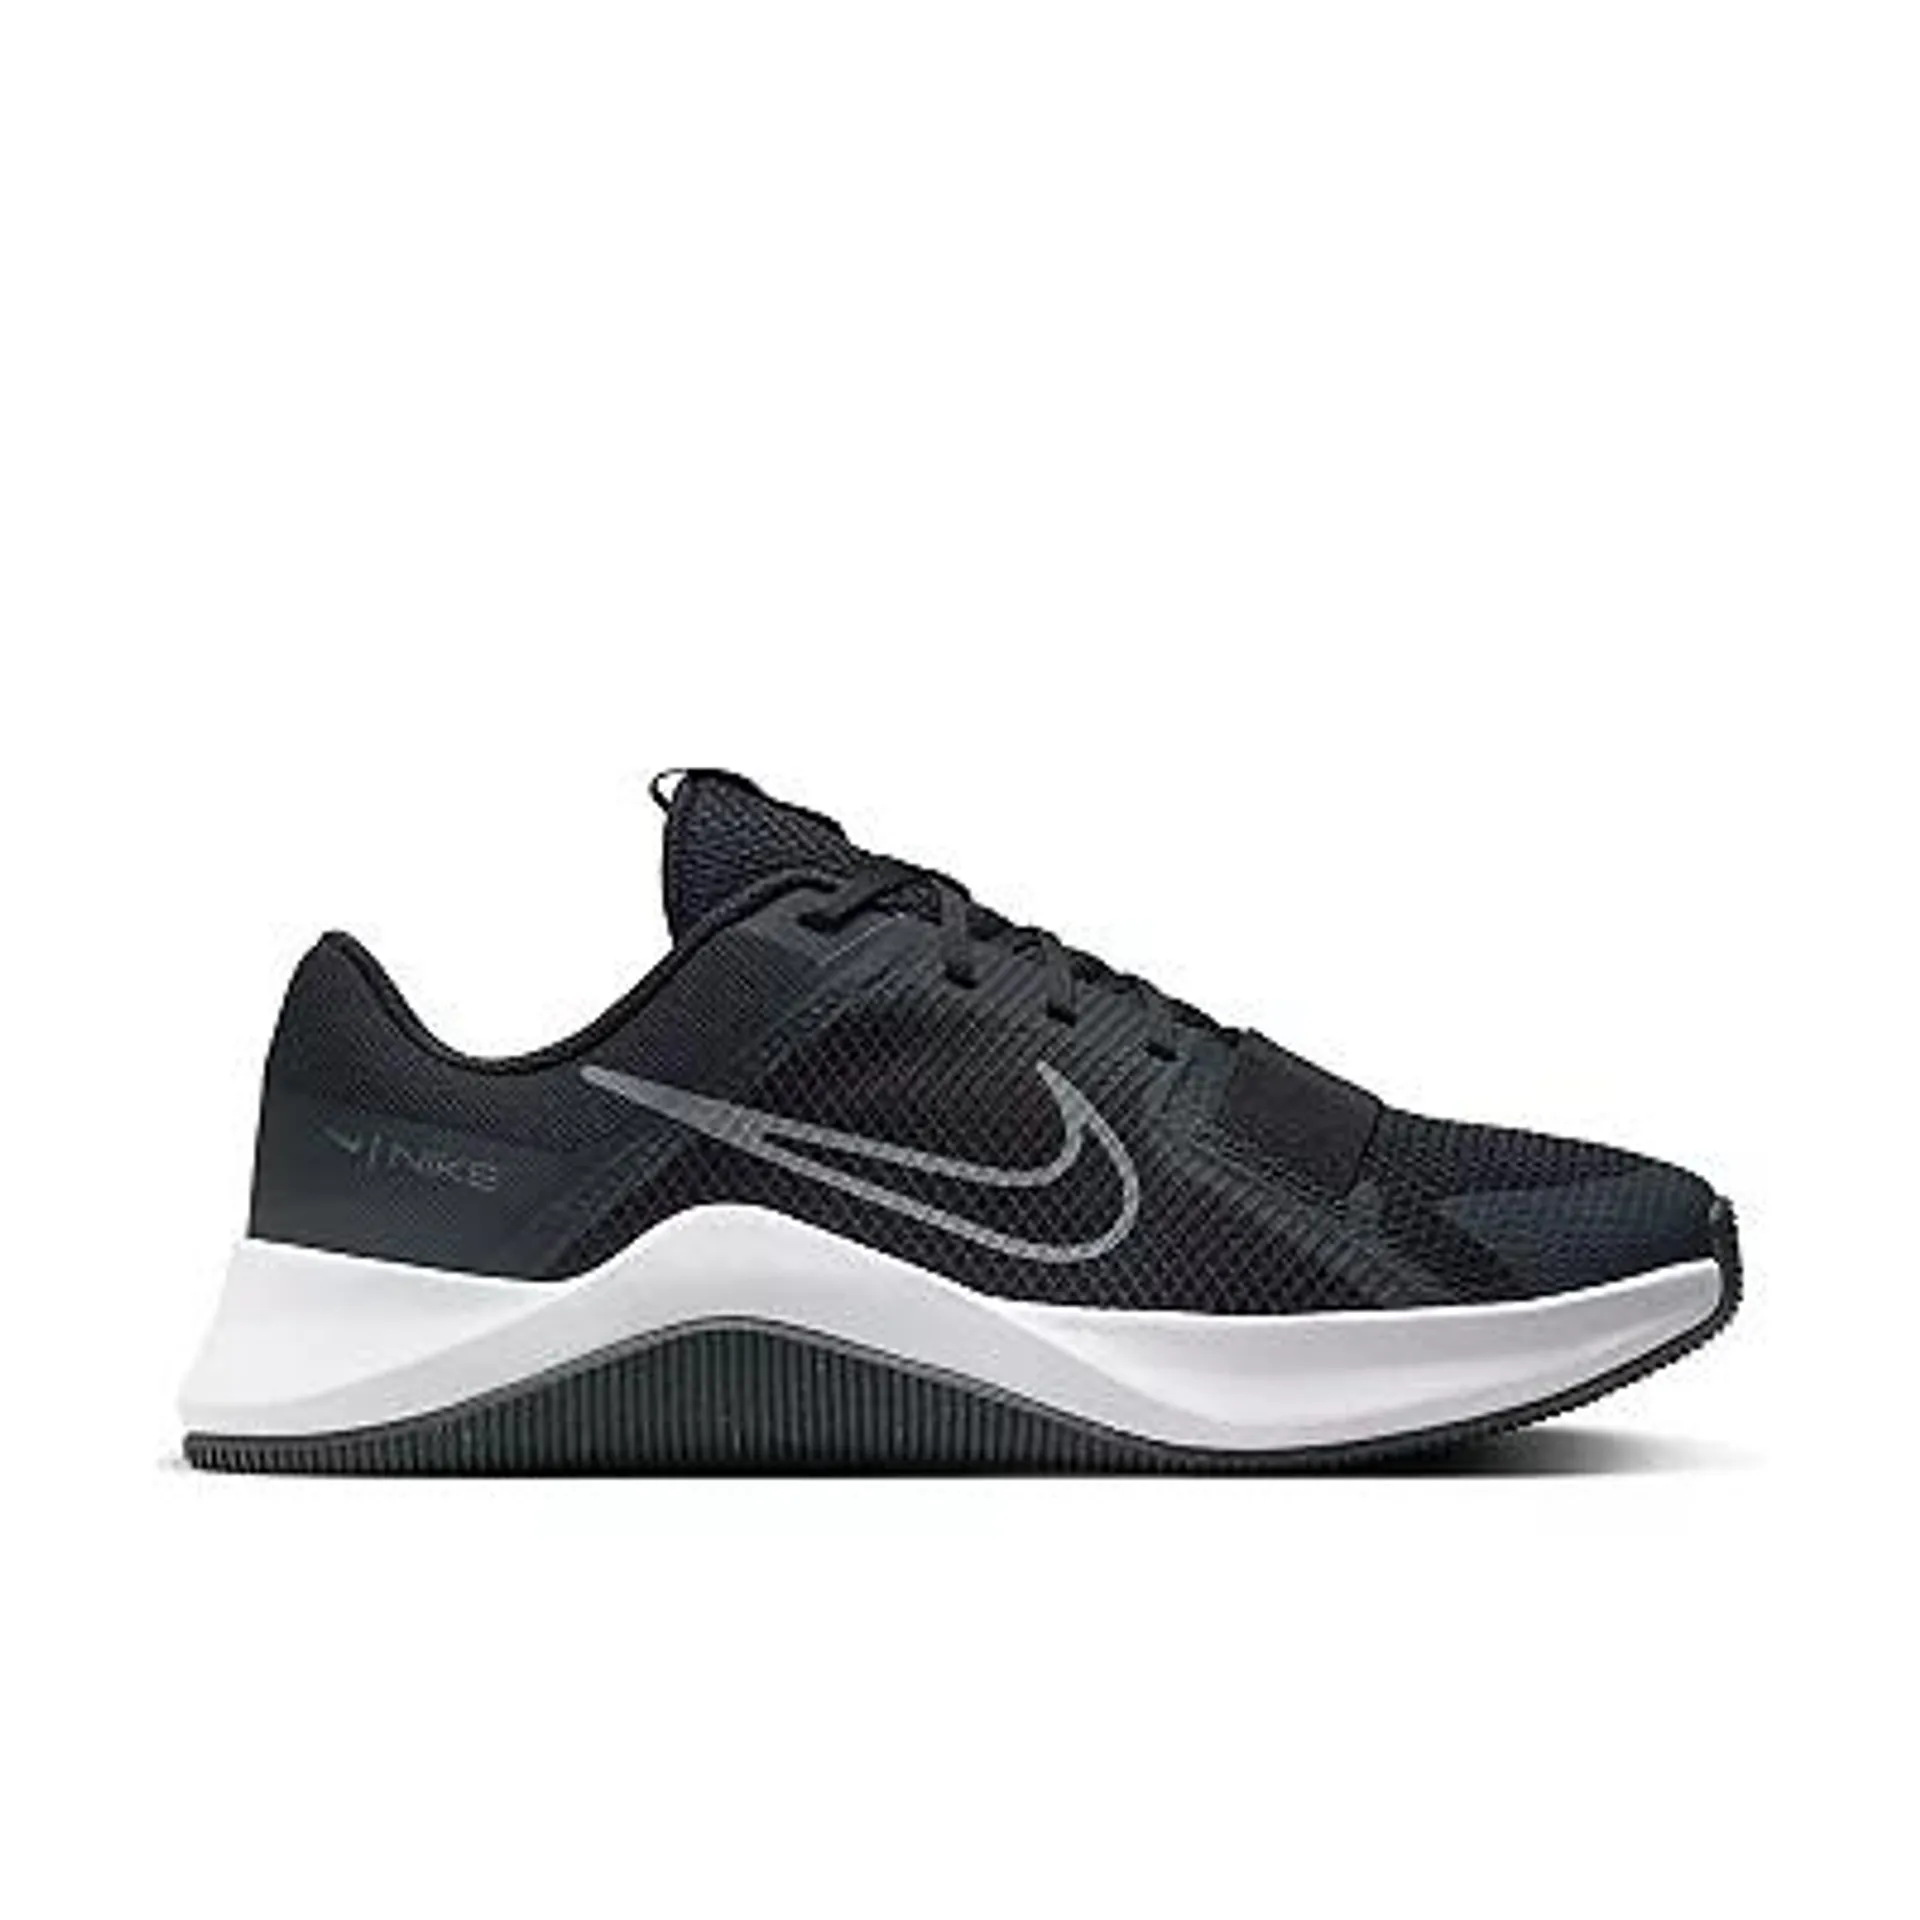 Nike MC Trainer 2 Men’s Training Shoes